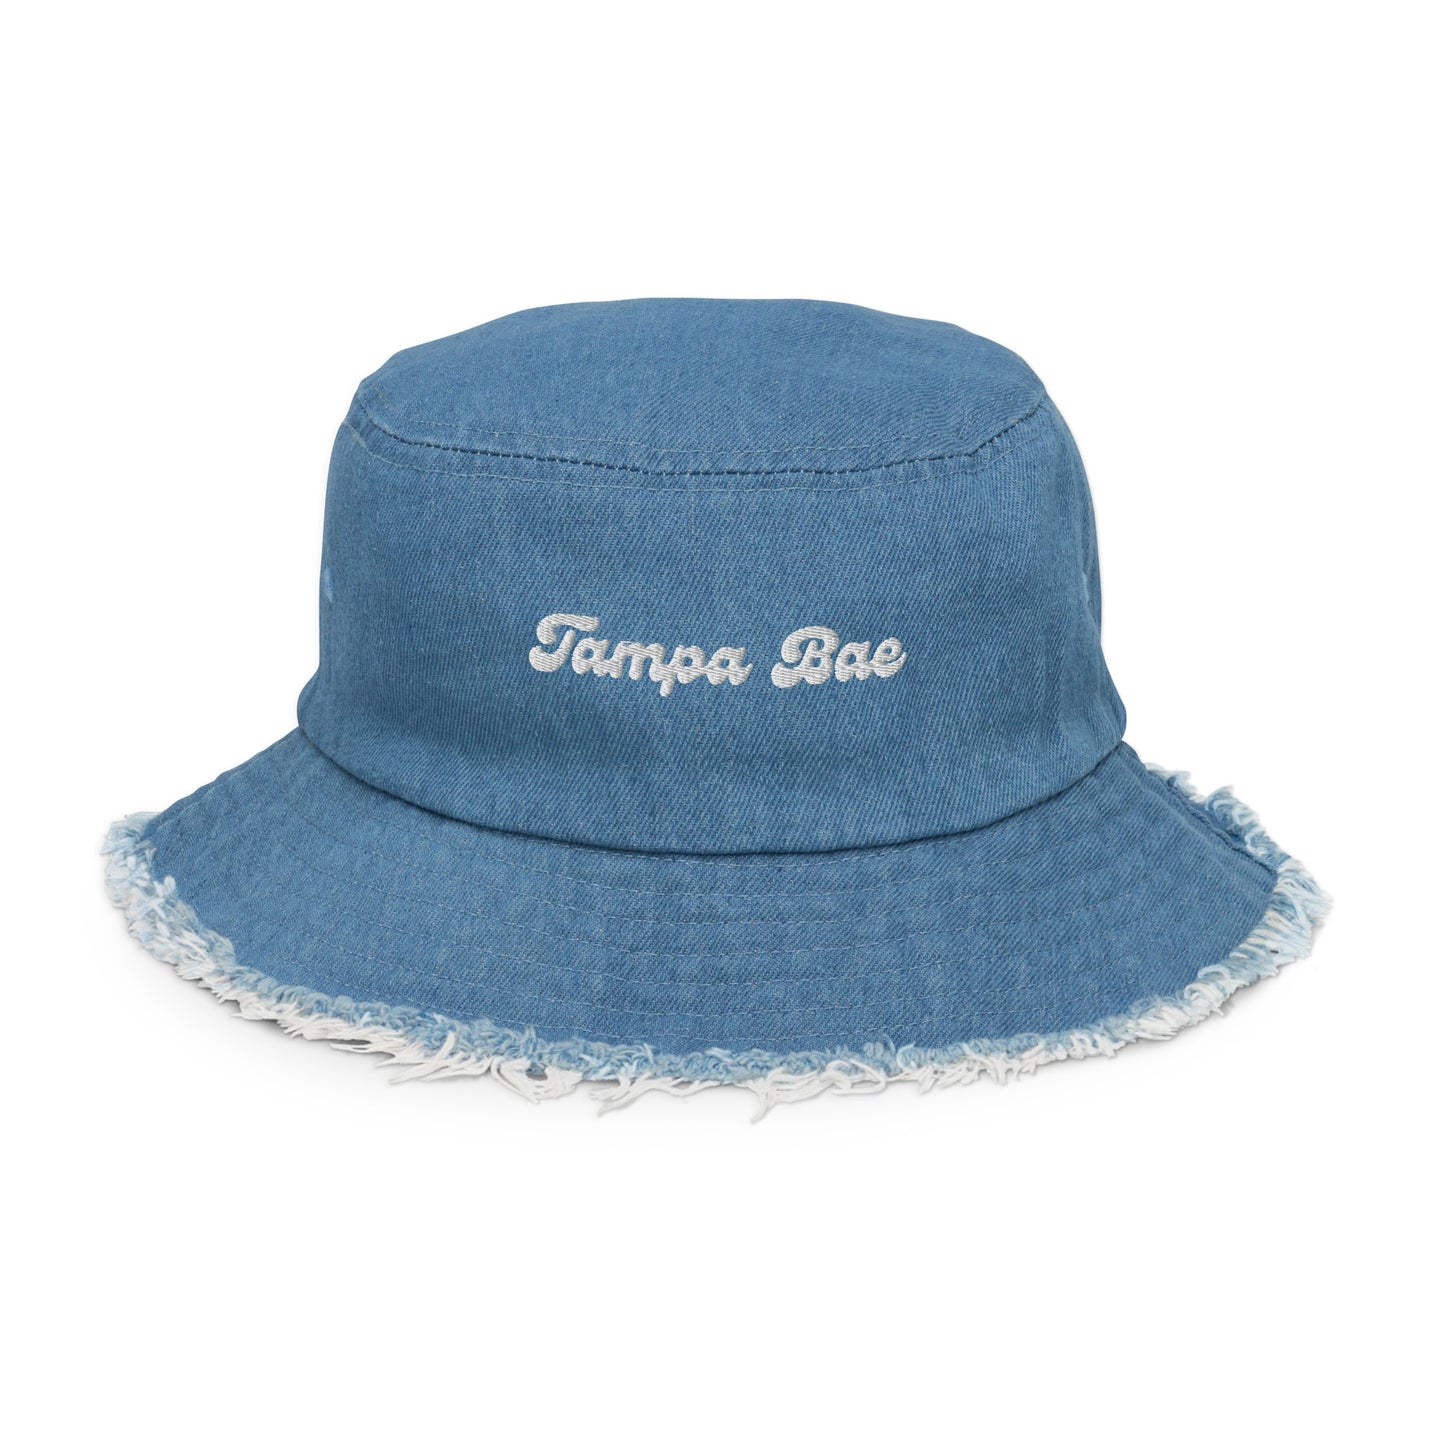 Tampa Bae Distressed Denim Bucket Hat - Light Blue